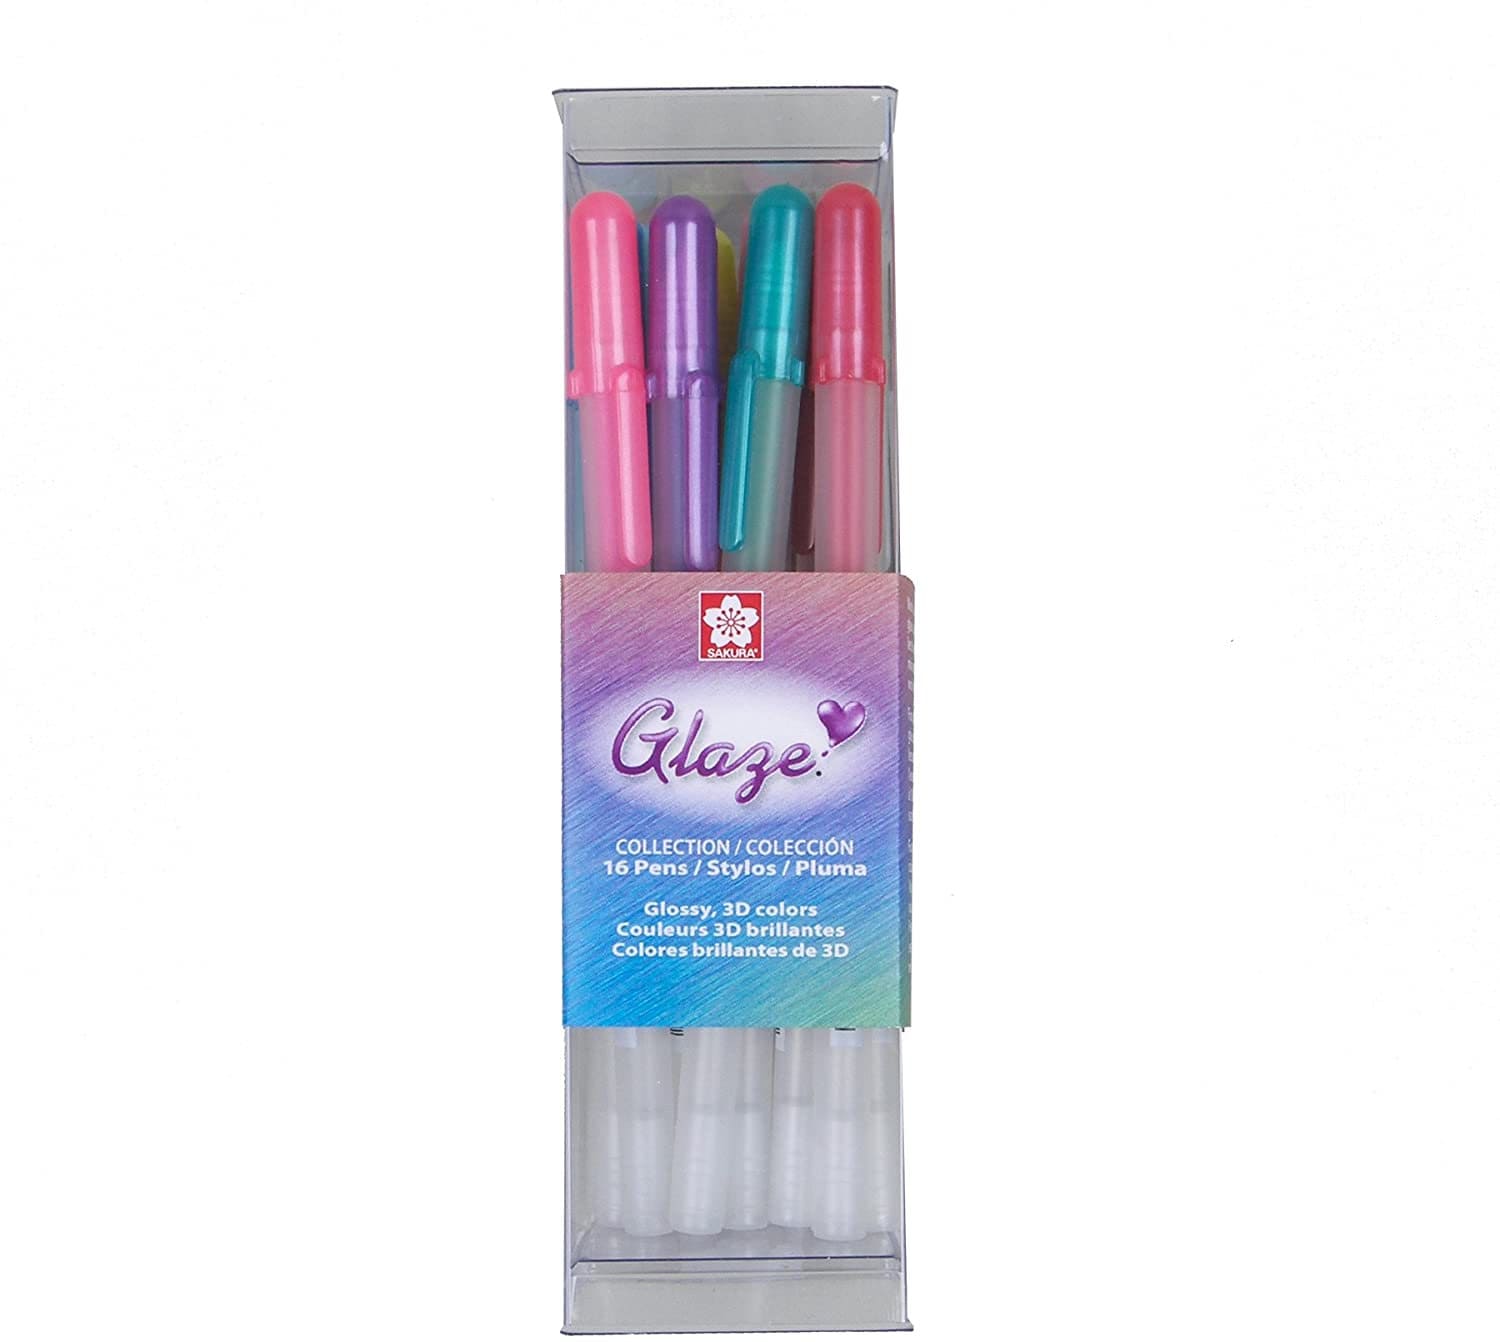 Pack of 3 Gelly Roll Classic Bright White Gel Pen Sakura Bold